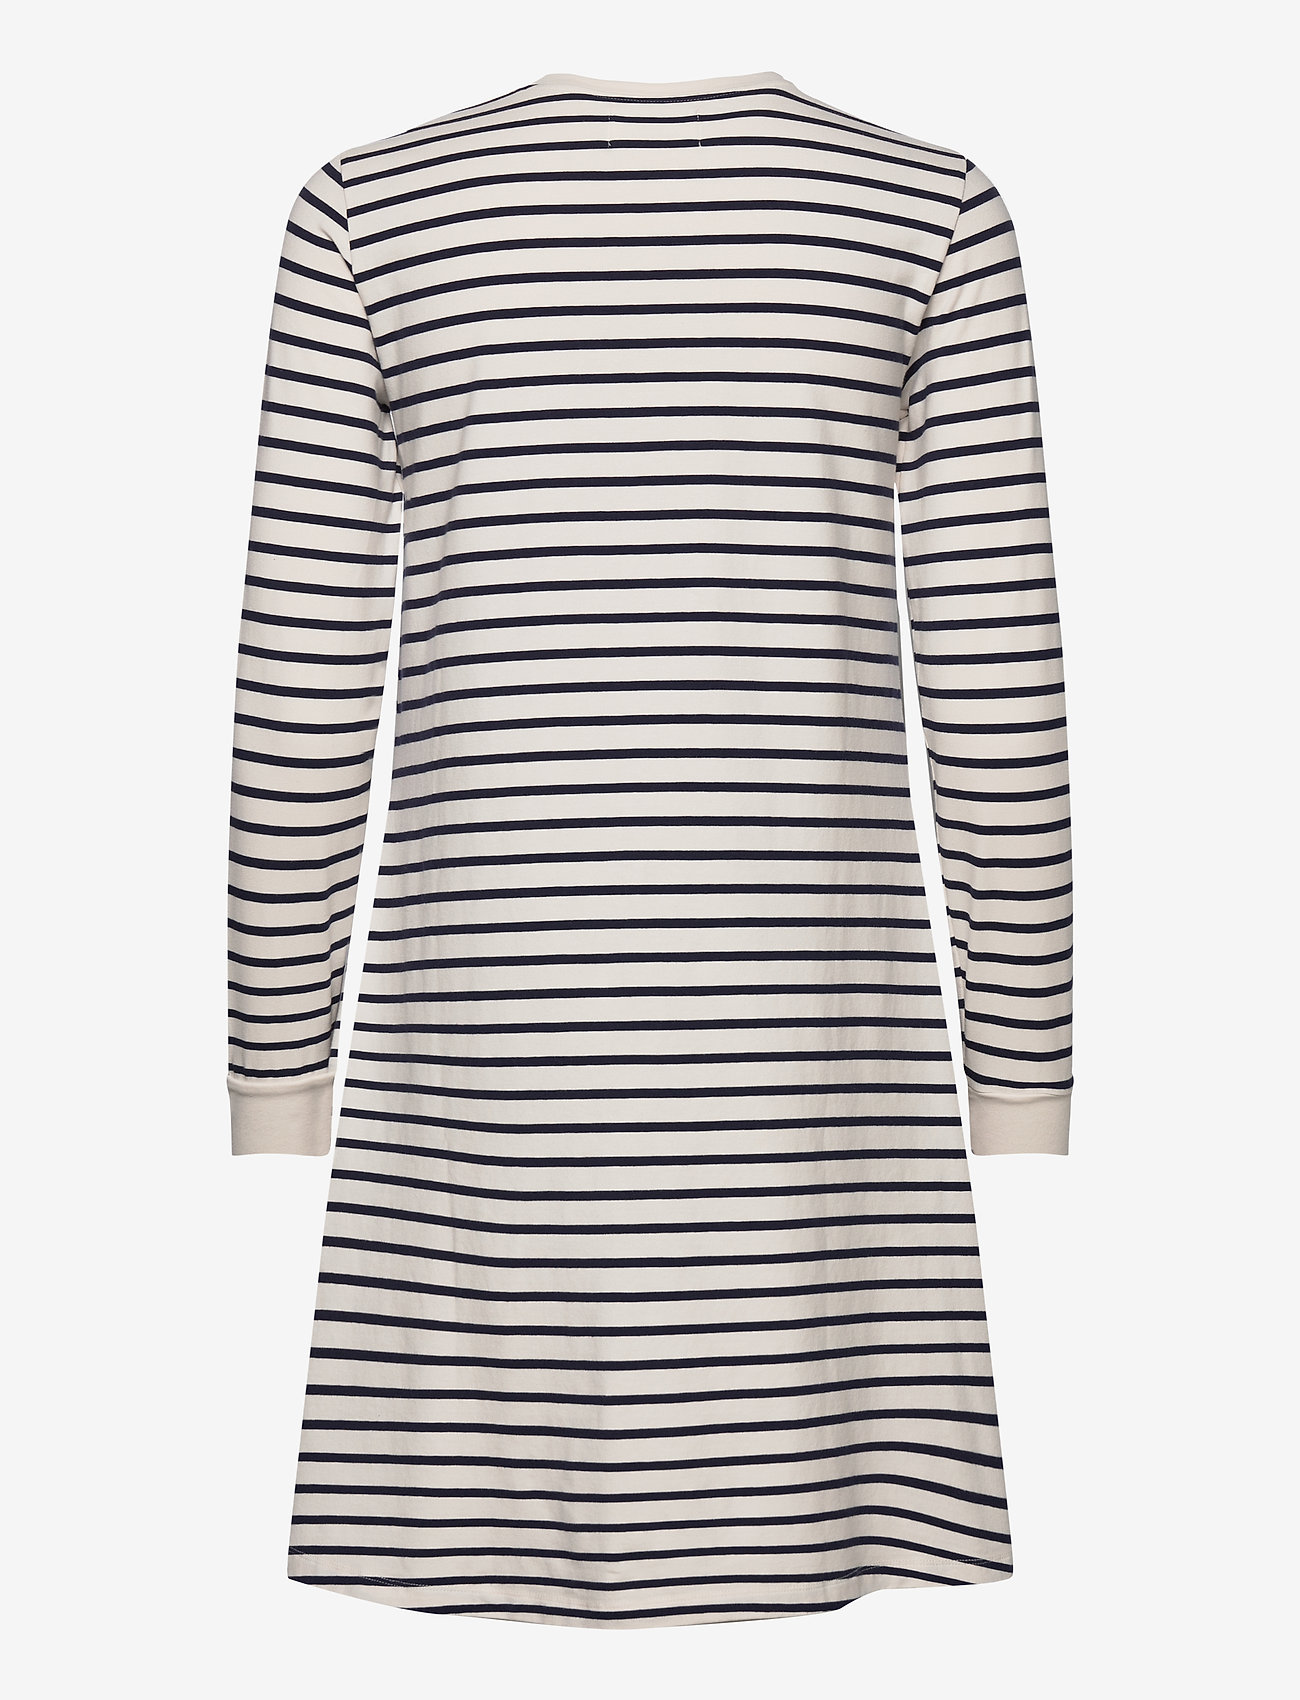 Double A by Wood Wood - Isa dress - sweatshirt-kjoler - off-white/navy stripes - 1